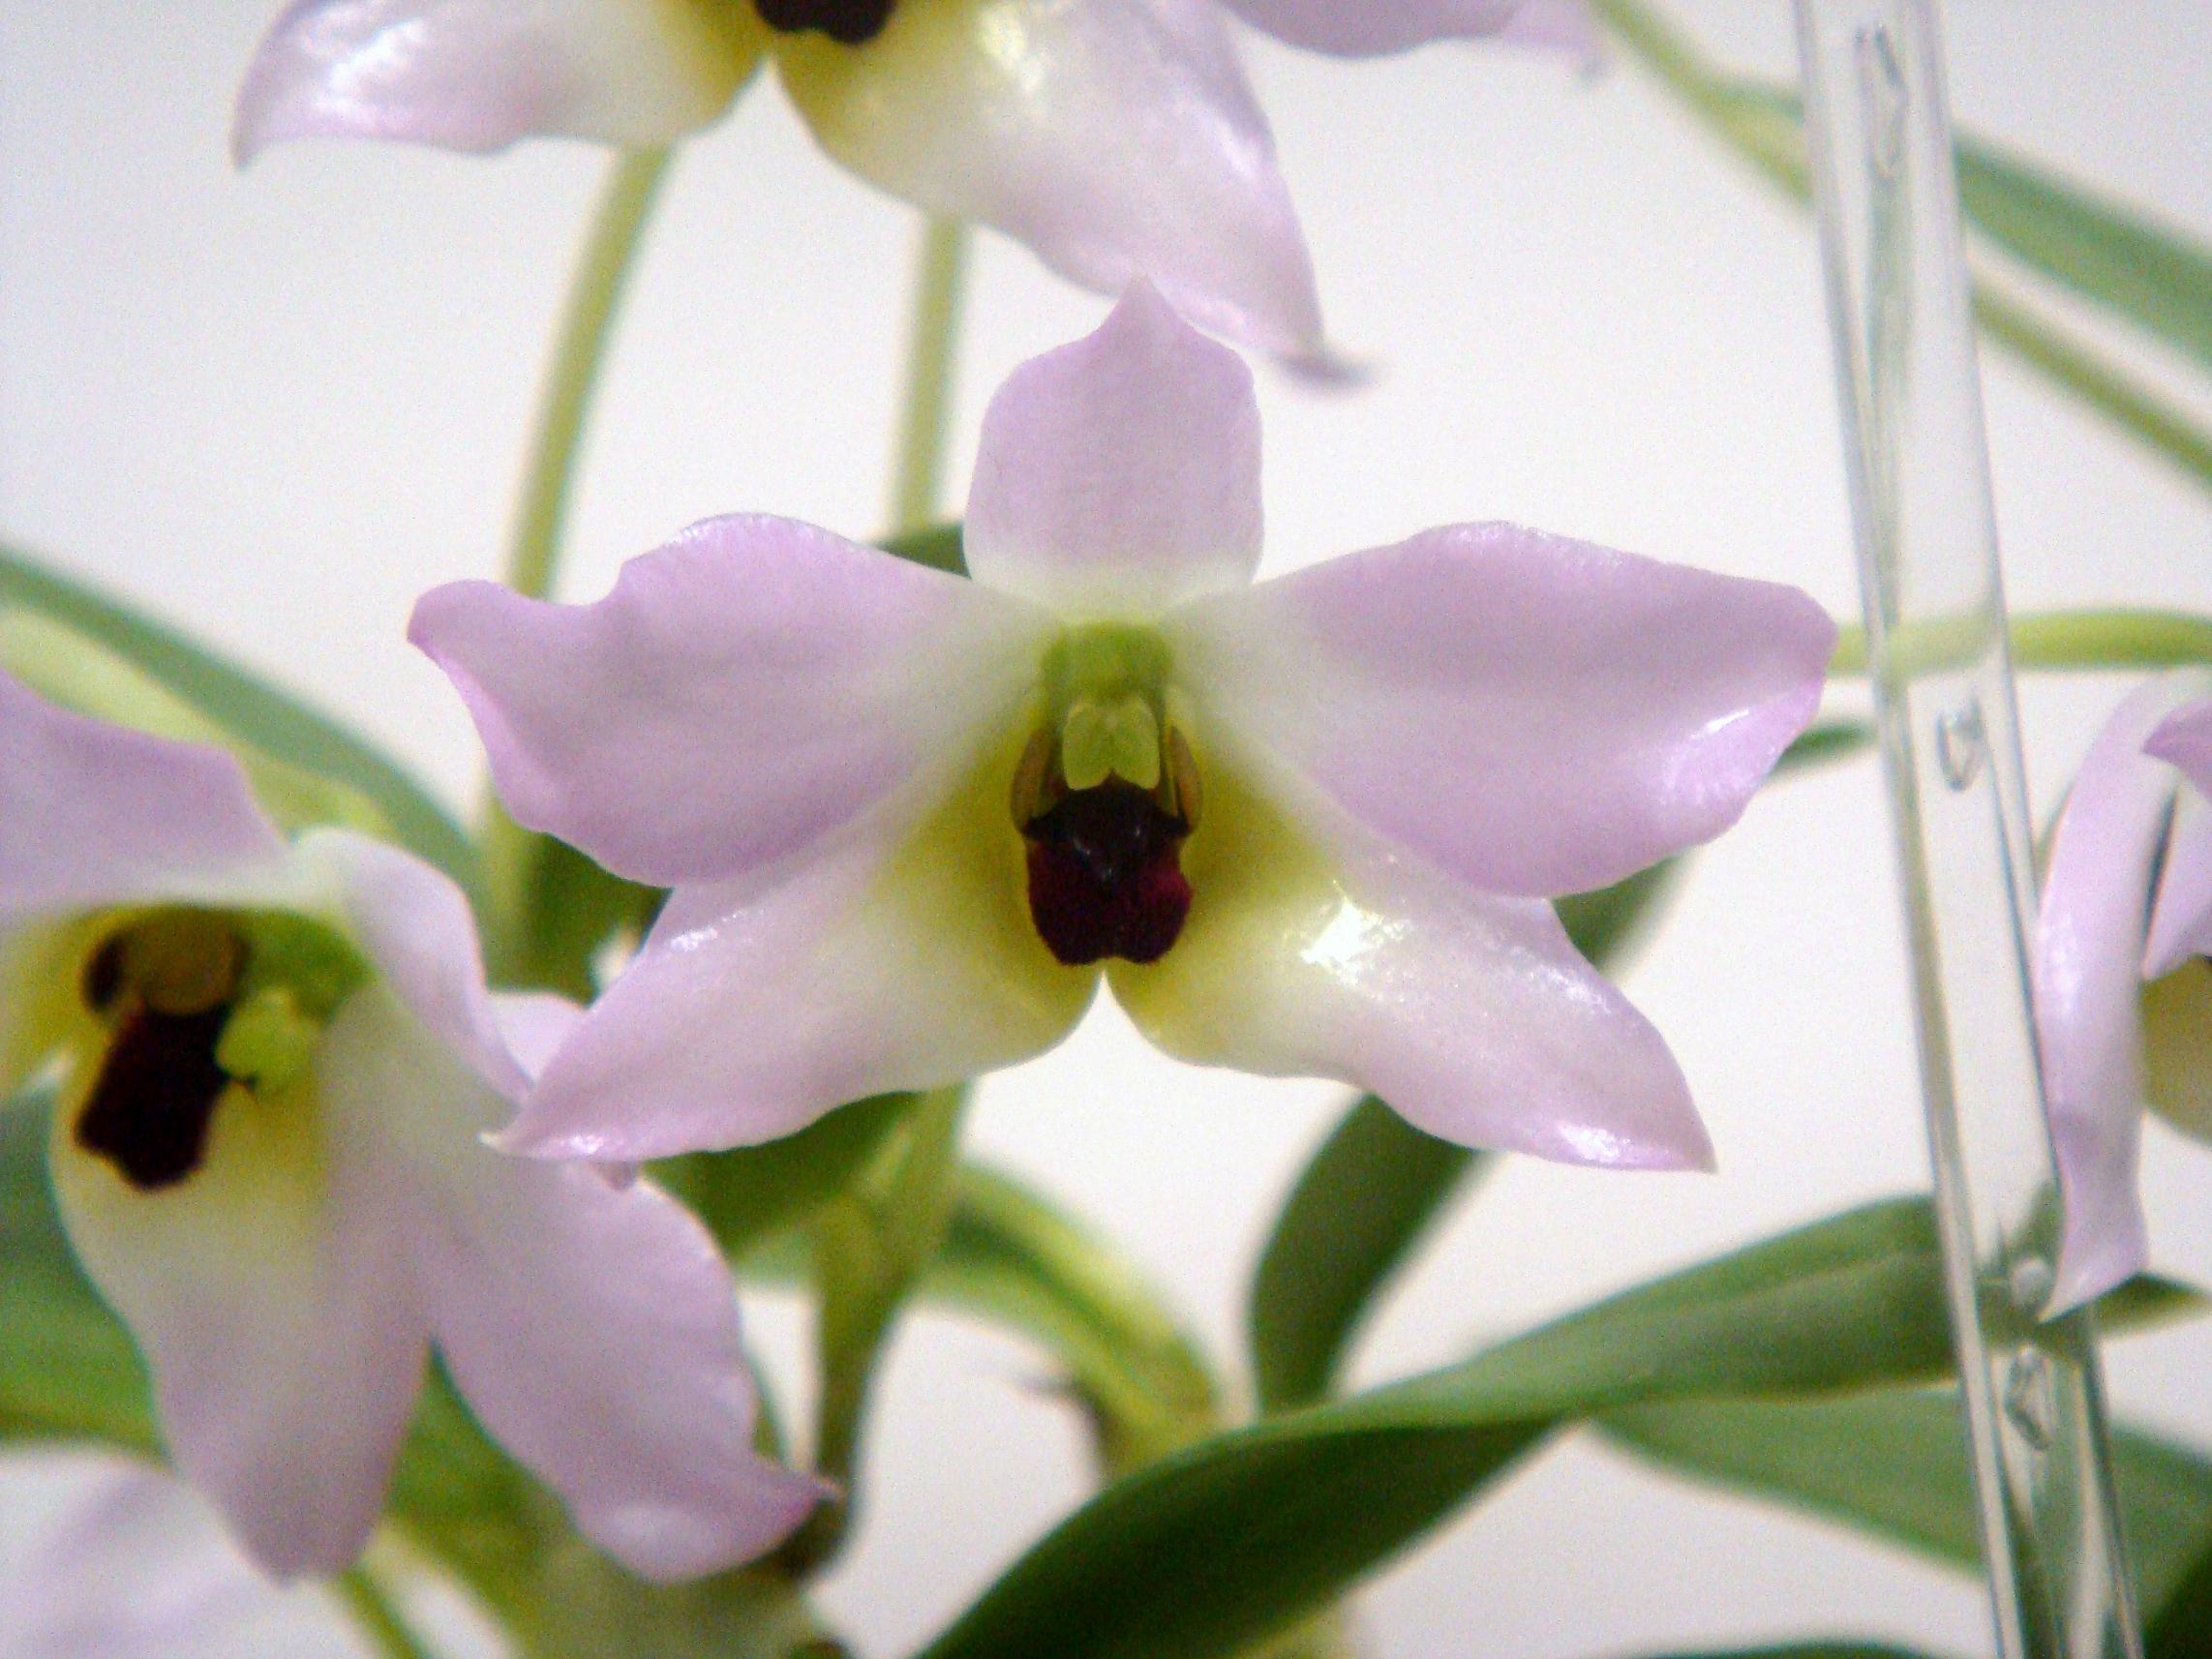 http://orchids.la.coocan.jp/Dendrobium/Dendrobium%20trantuanii/DSC02370.JPG